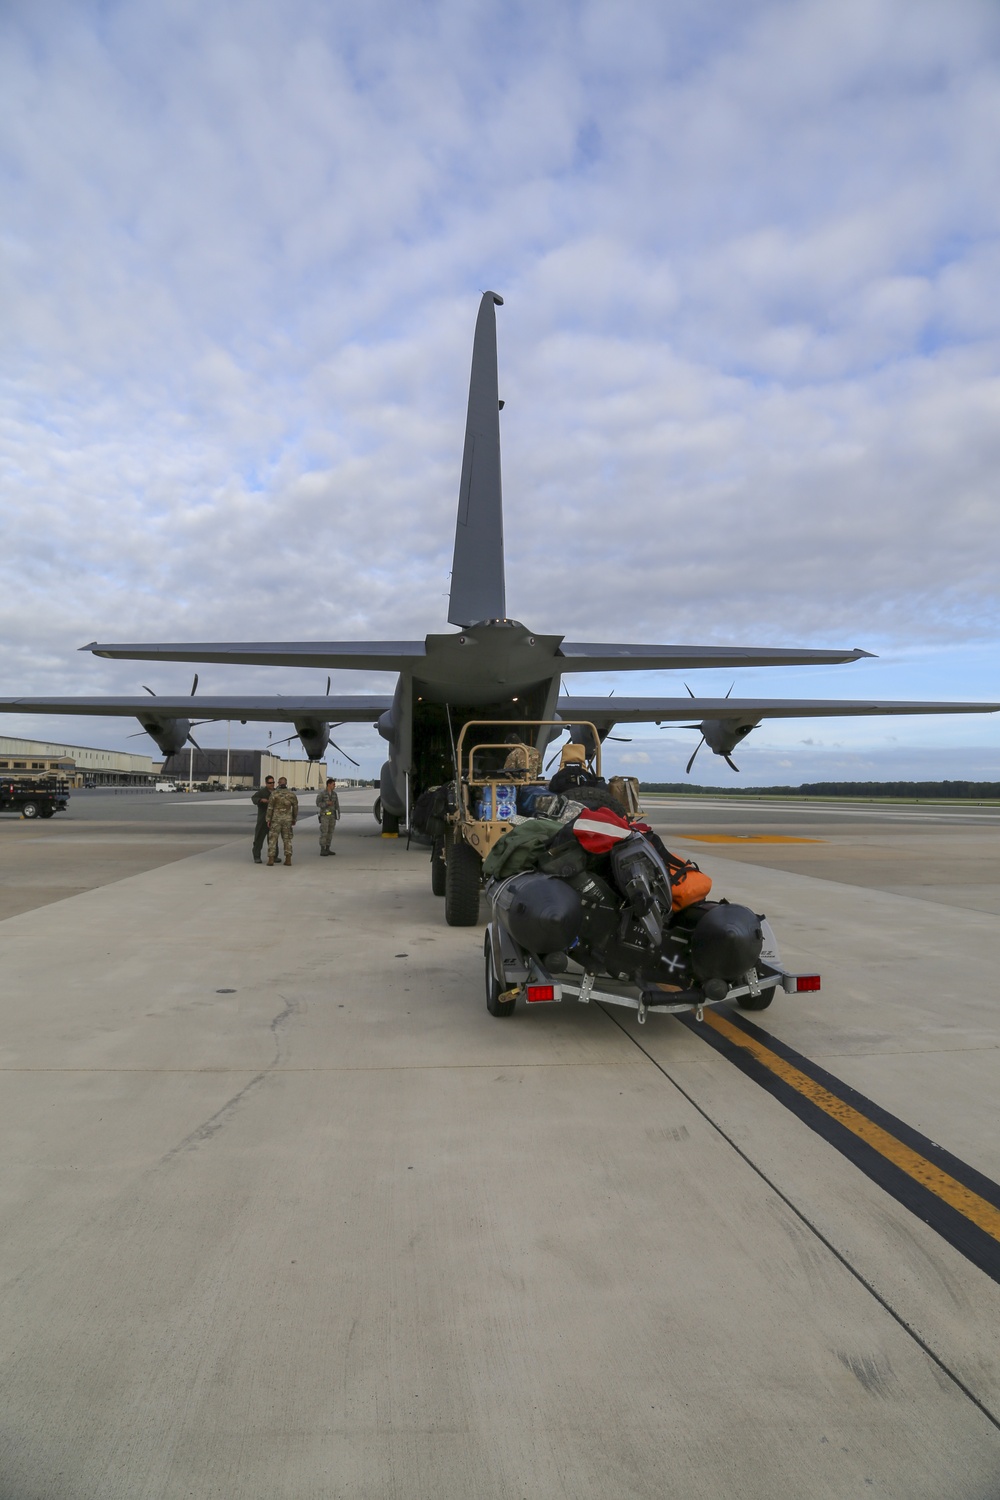 Pennsylvania, Alaska, National Guard arrive at Naval Station Oceana